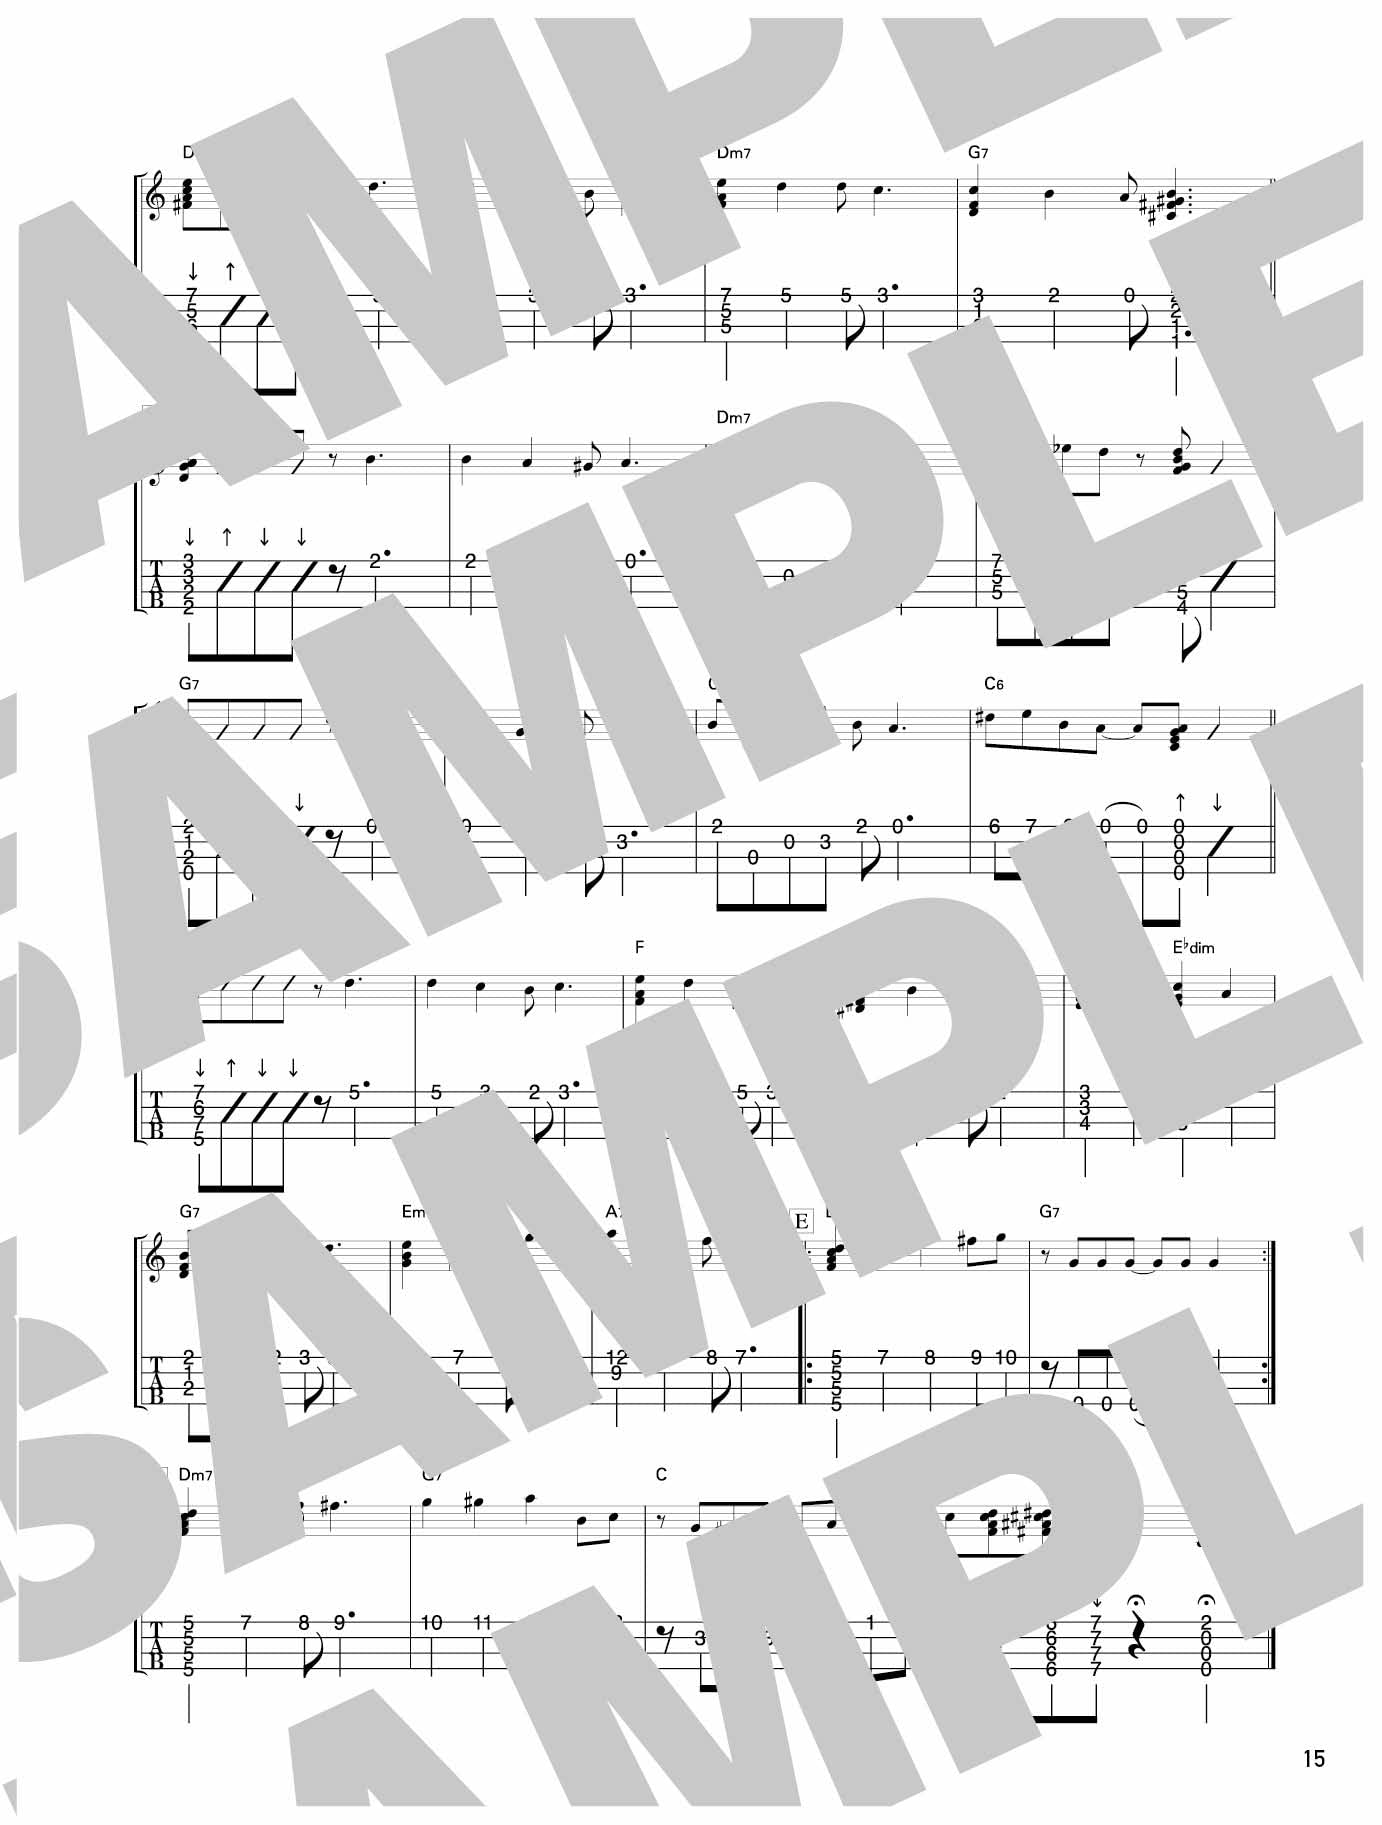 Sweet Jazz Ukulele Solo Jazz arrangement w/CD(Demo Performance) TAB Sheet Music Book